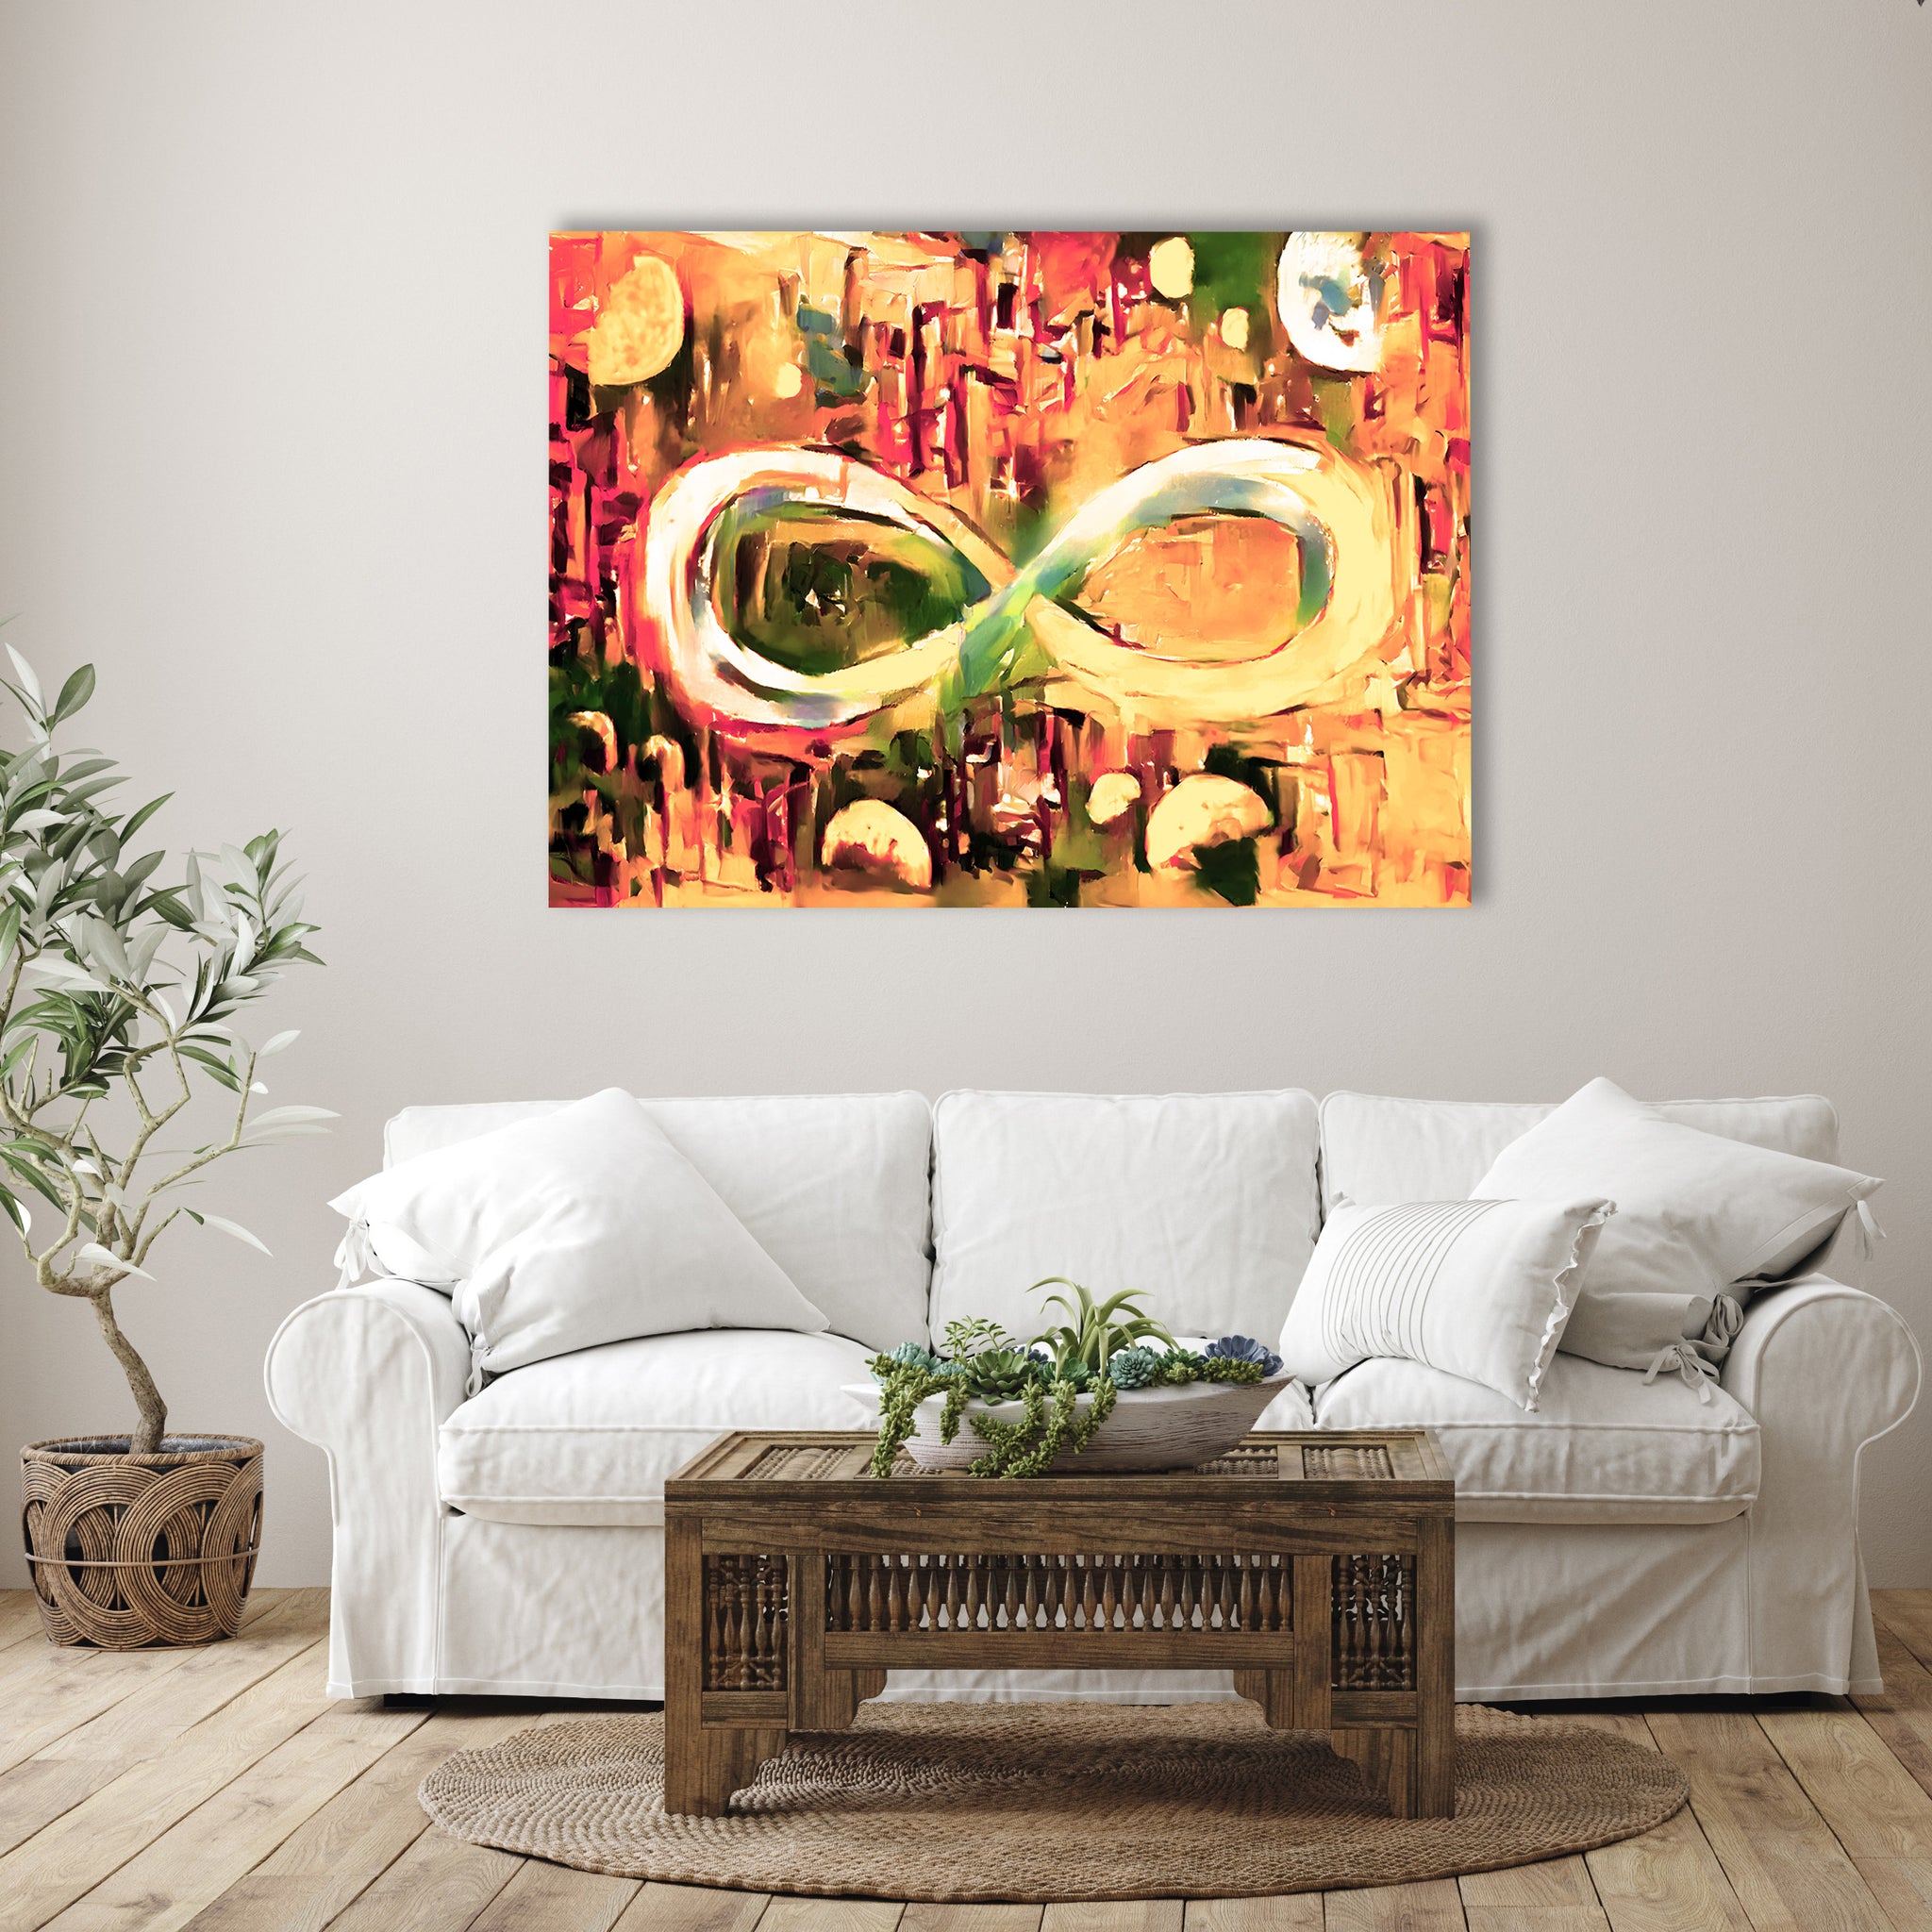 Infinite Galaxy Yellow & Orange, Infinity, Abstract Art, Canvas Wall Art, Wall Decor, Artistic Painting, Digital Artwork, Colorful